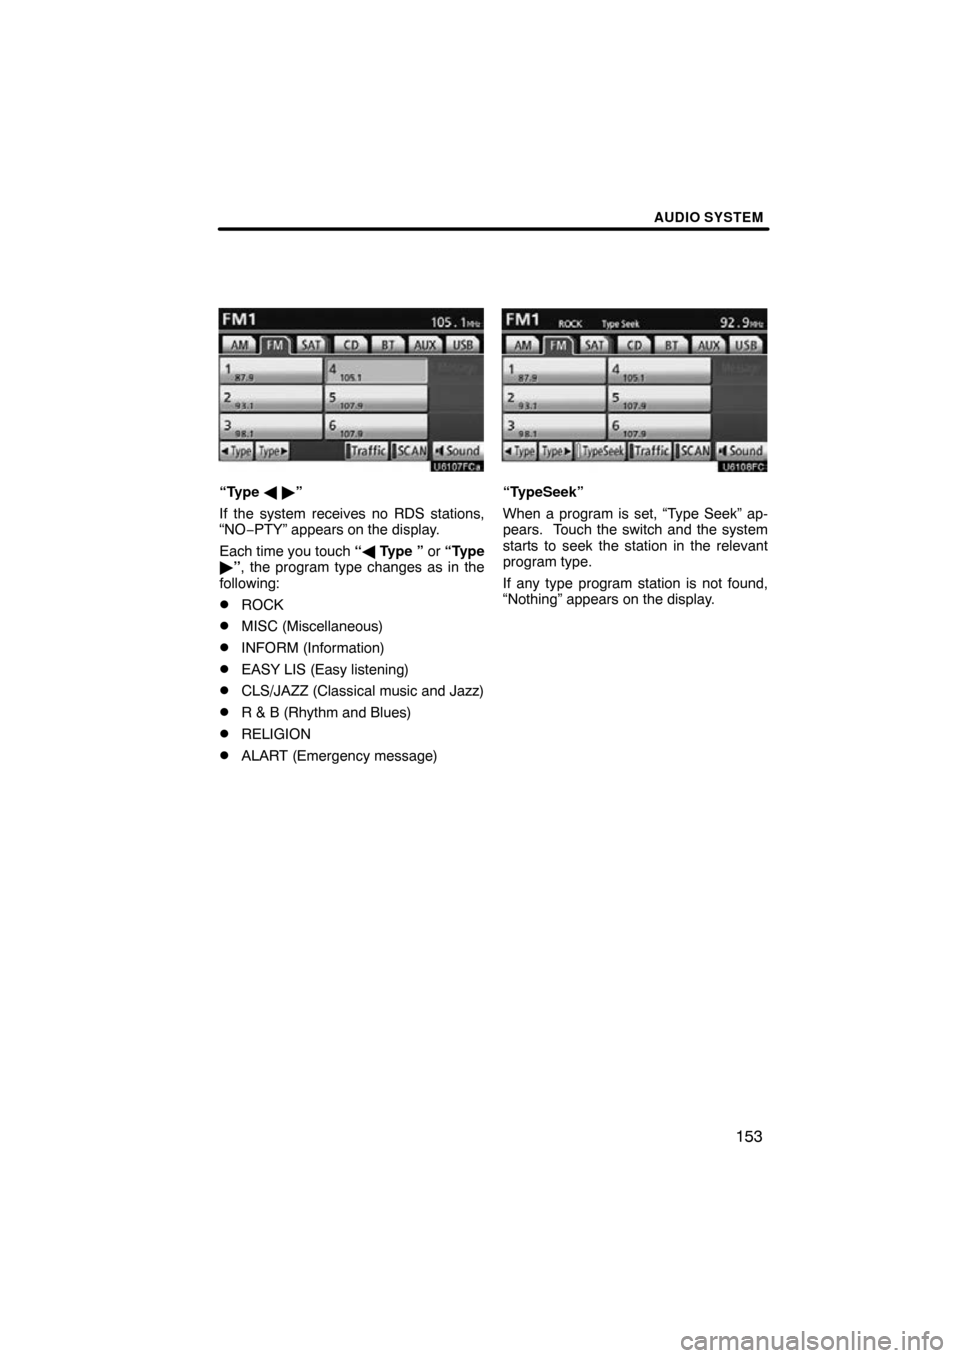 TOYOTA CAMRY 2010 XV40 / 8.G Navigation Manual AUDIO SYSTEM
153
“Type   ”
If the system receives no RDS stations,
“NO−PTY” appears on the display.
Each time you touch  “ Type ” or “Type
 ”, the program type changes as in the
